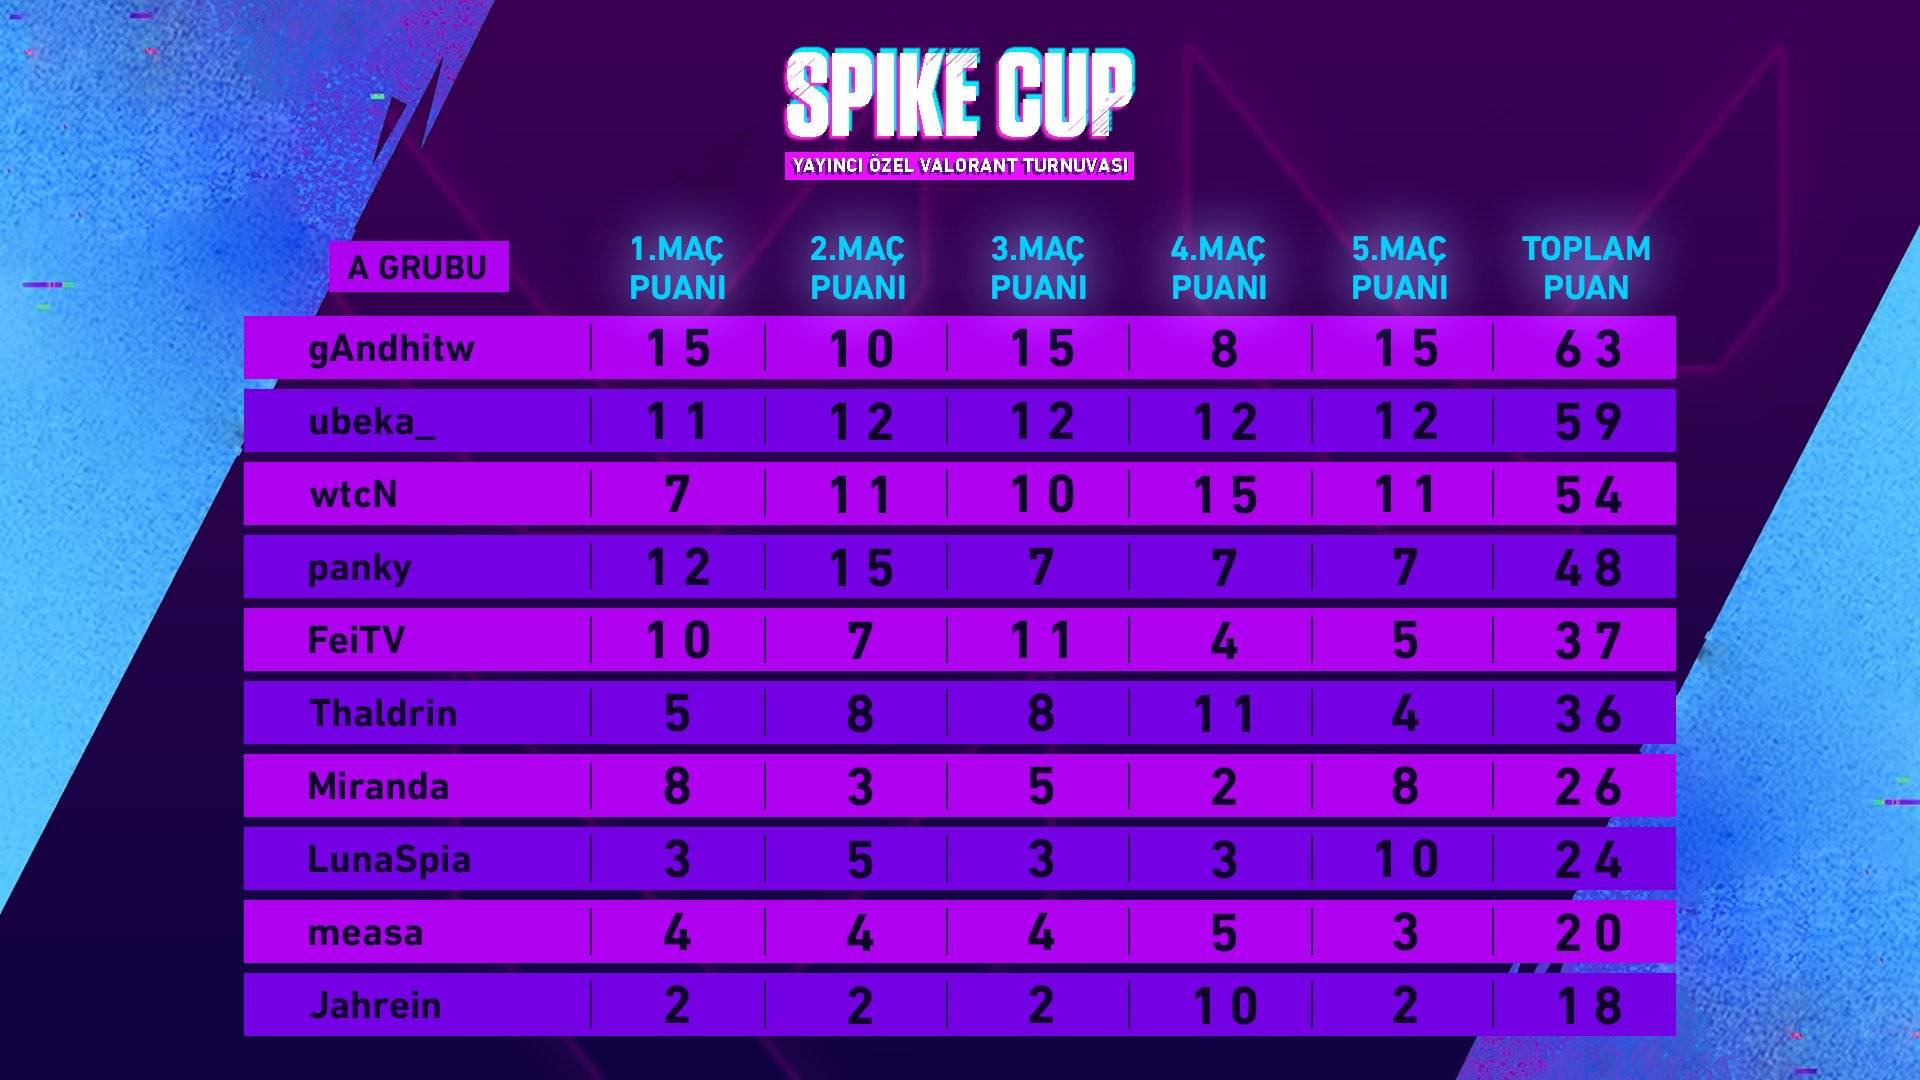 Spike Cup a